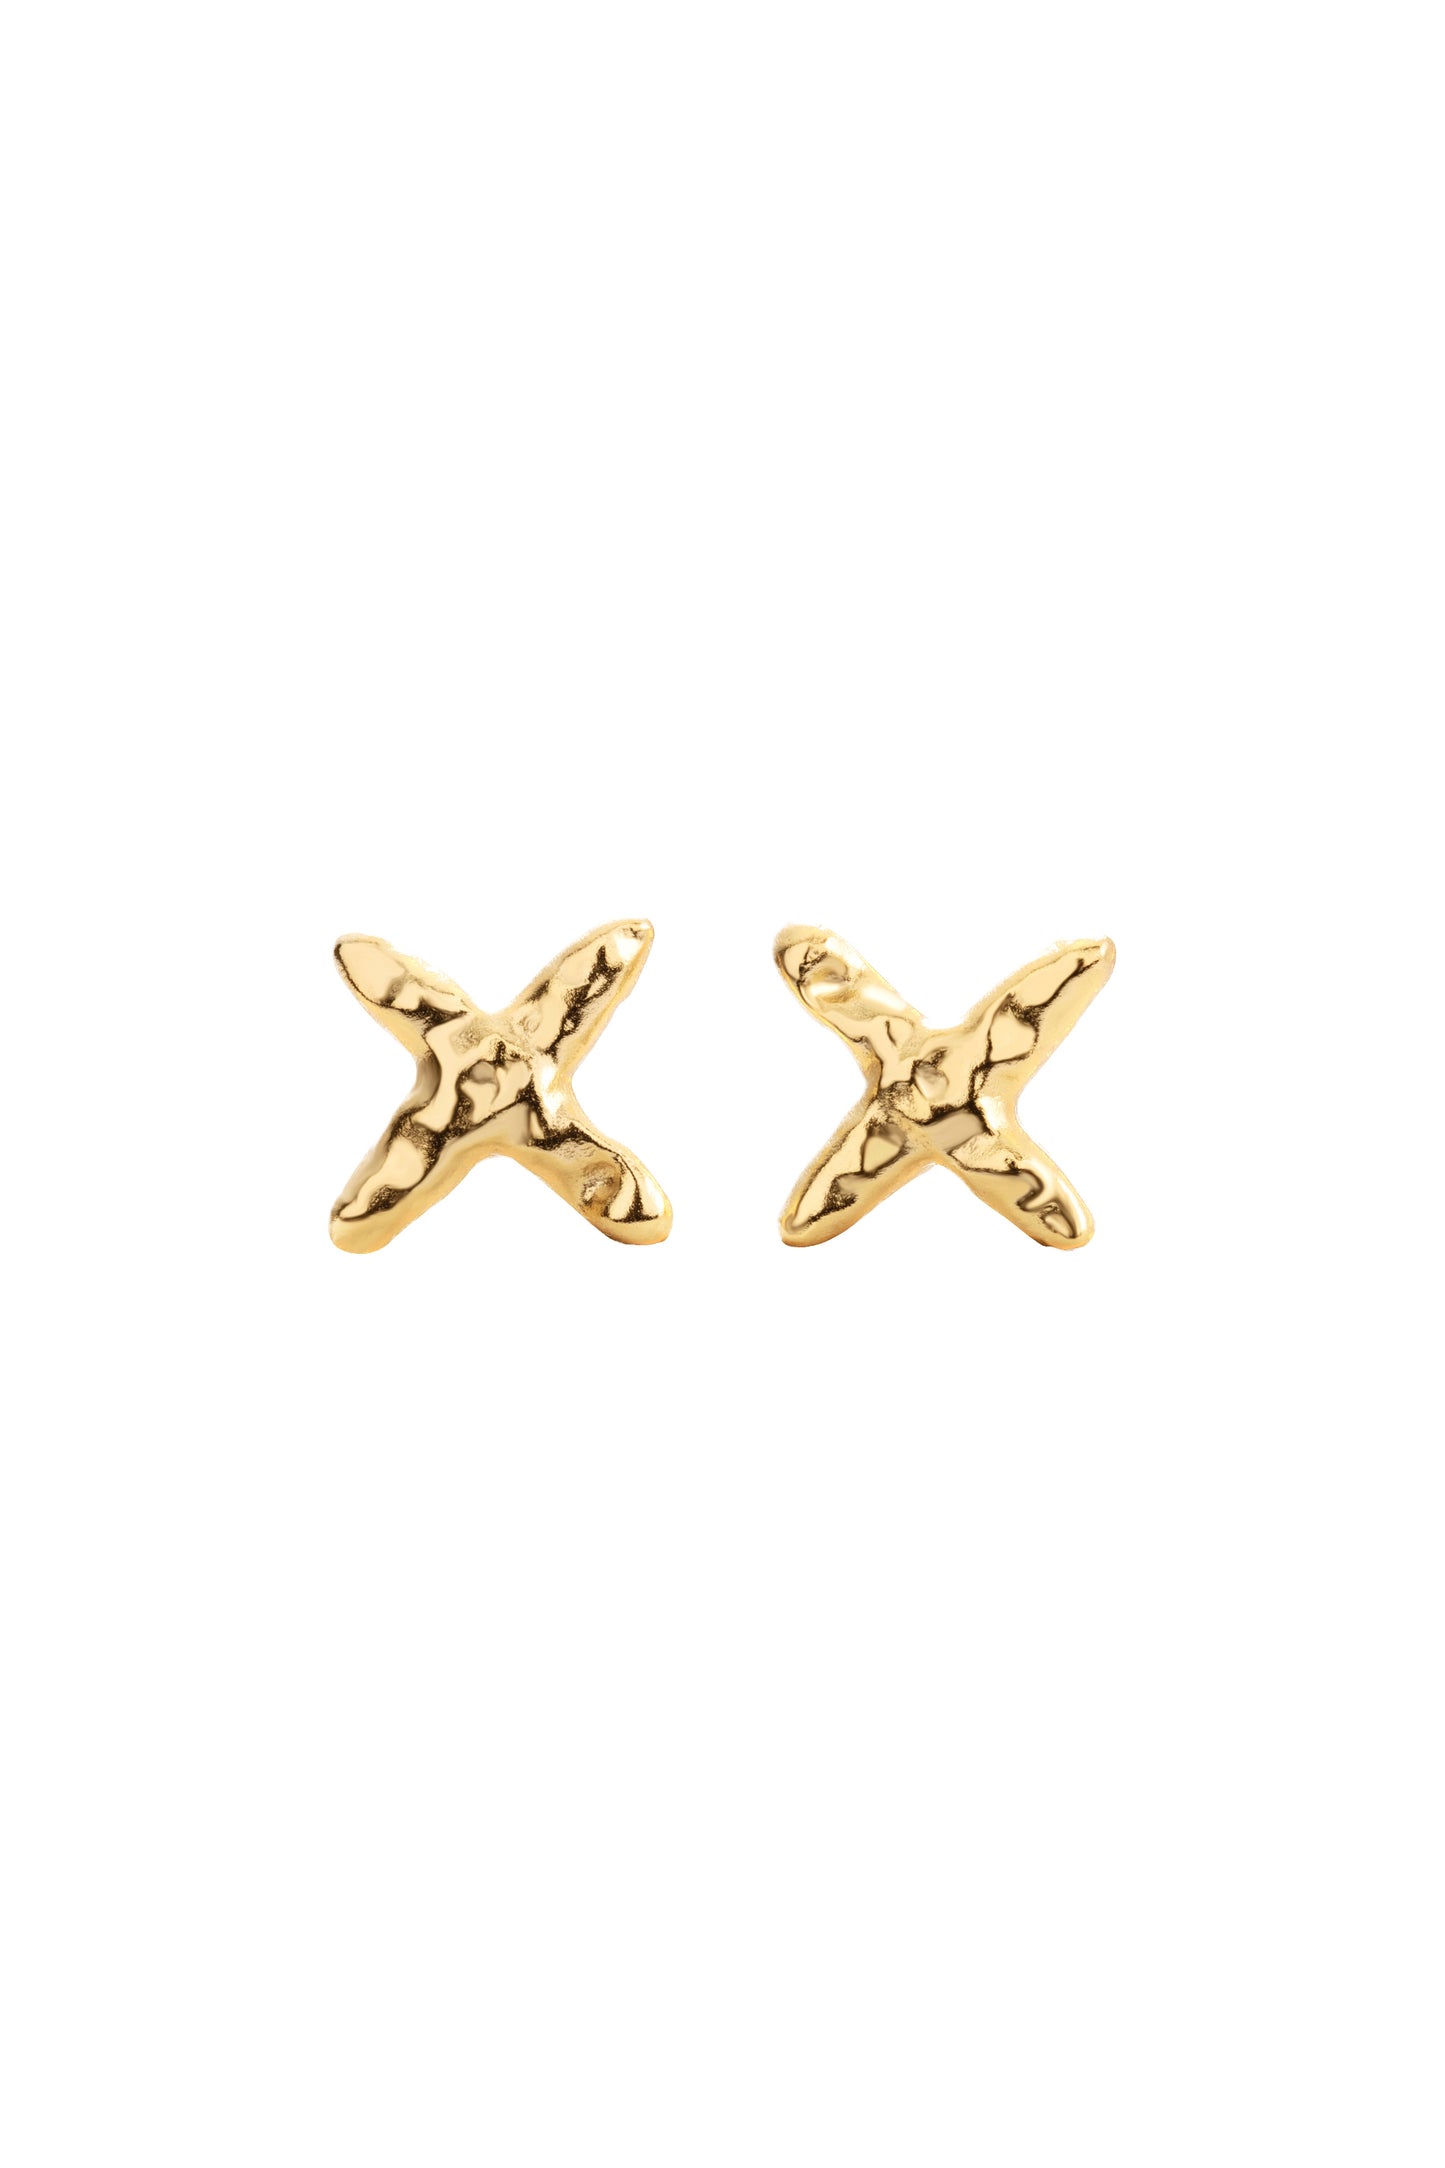 Onehe CrosscStud Earrings - Gold